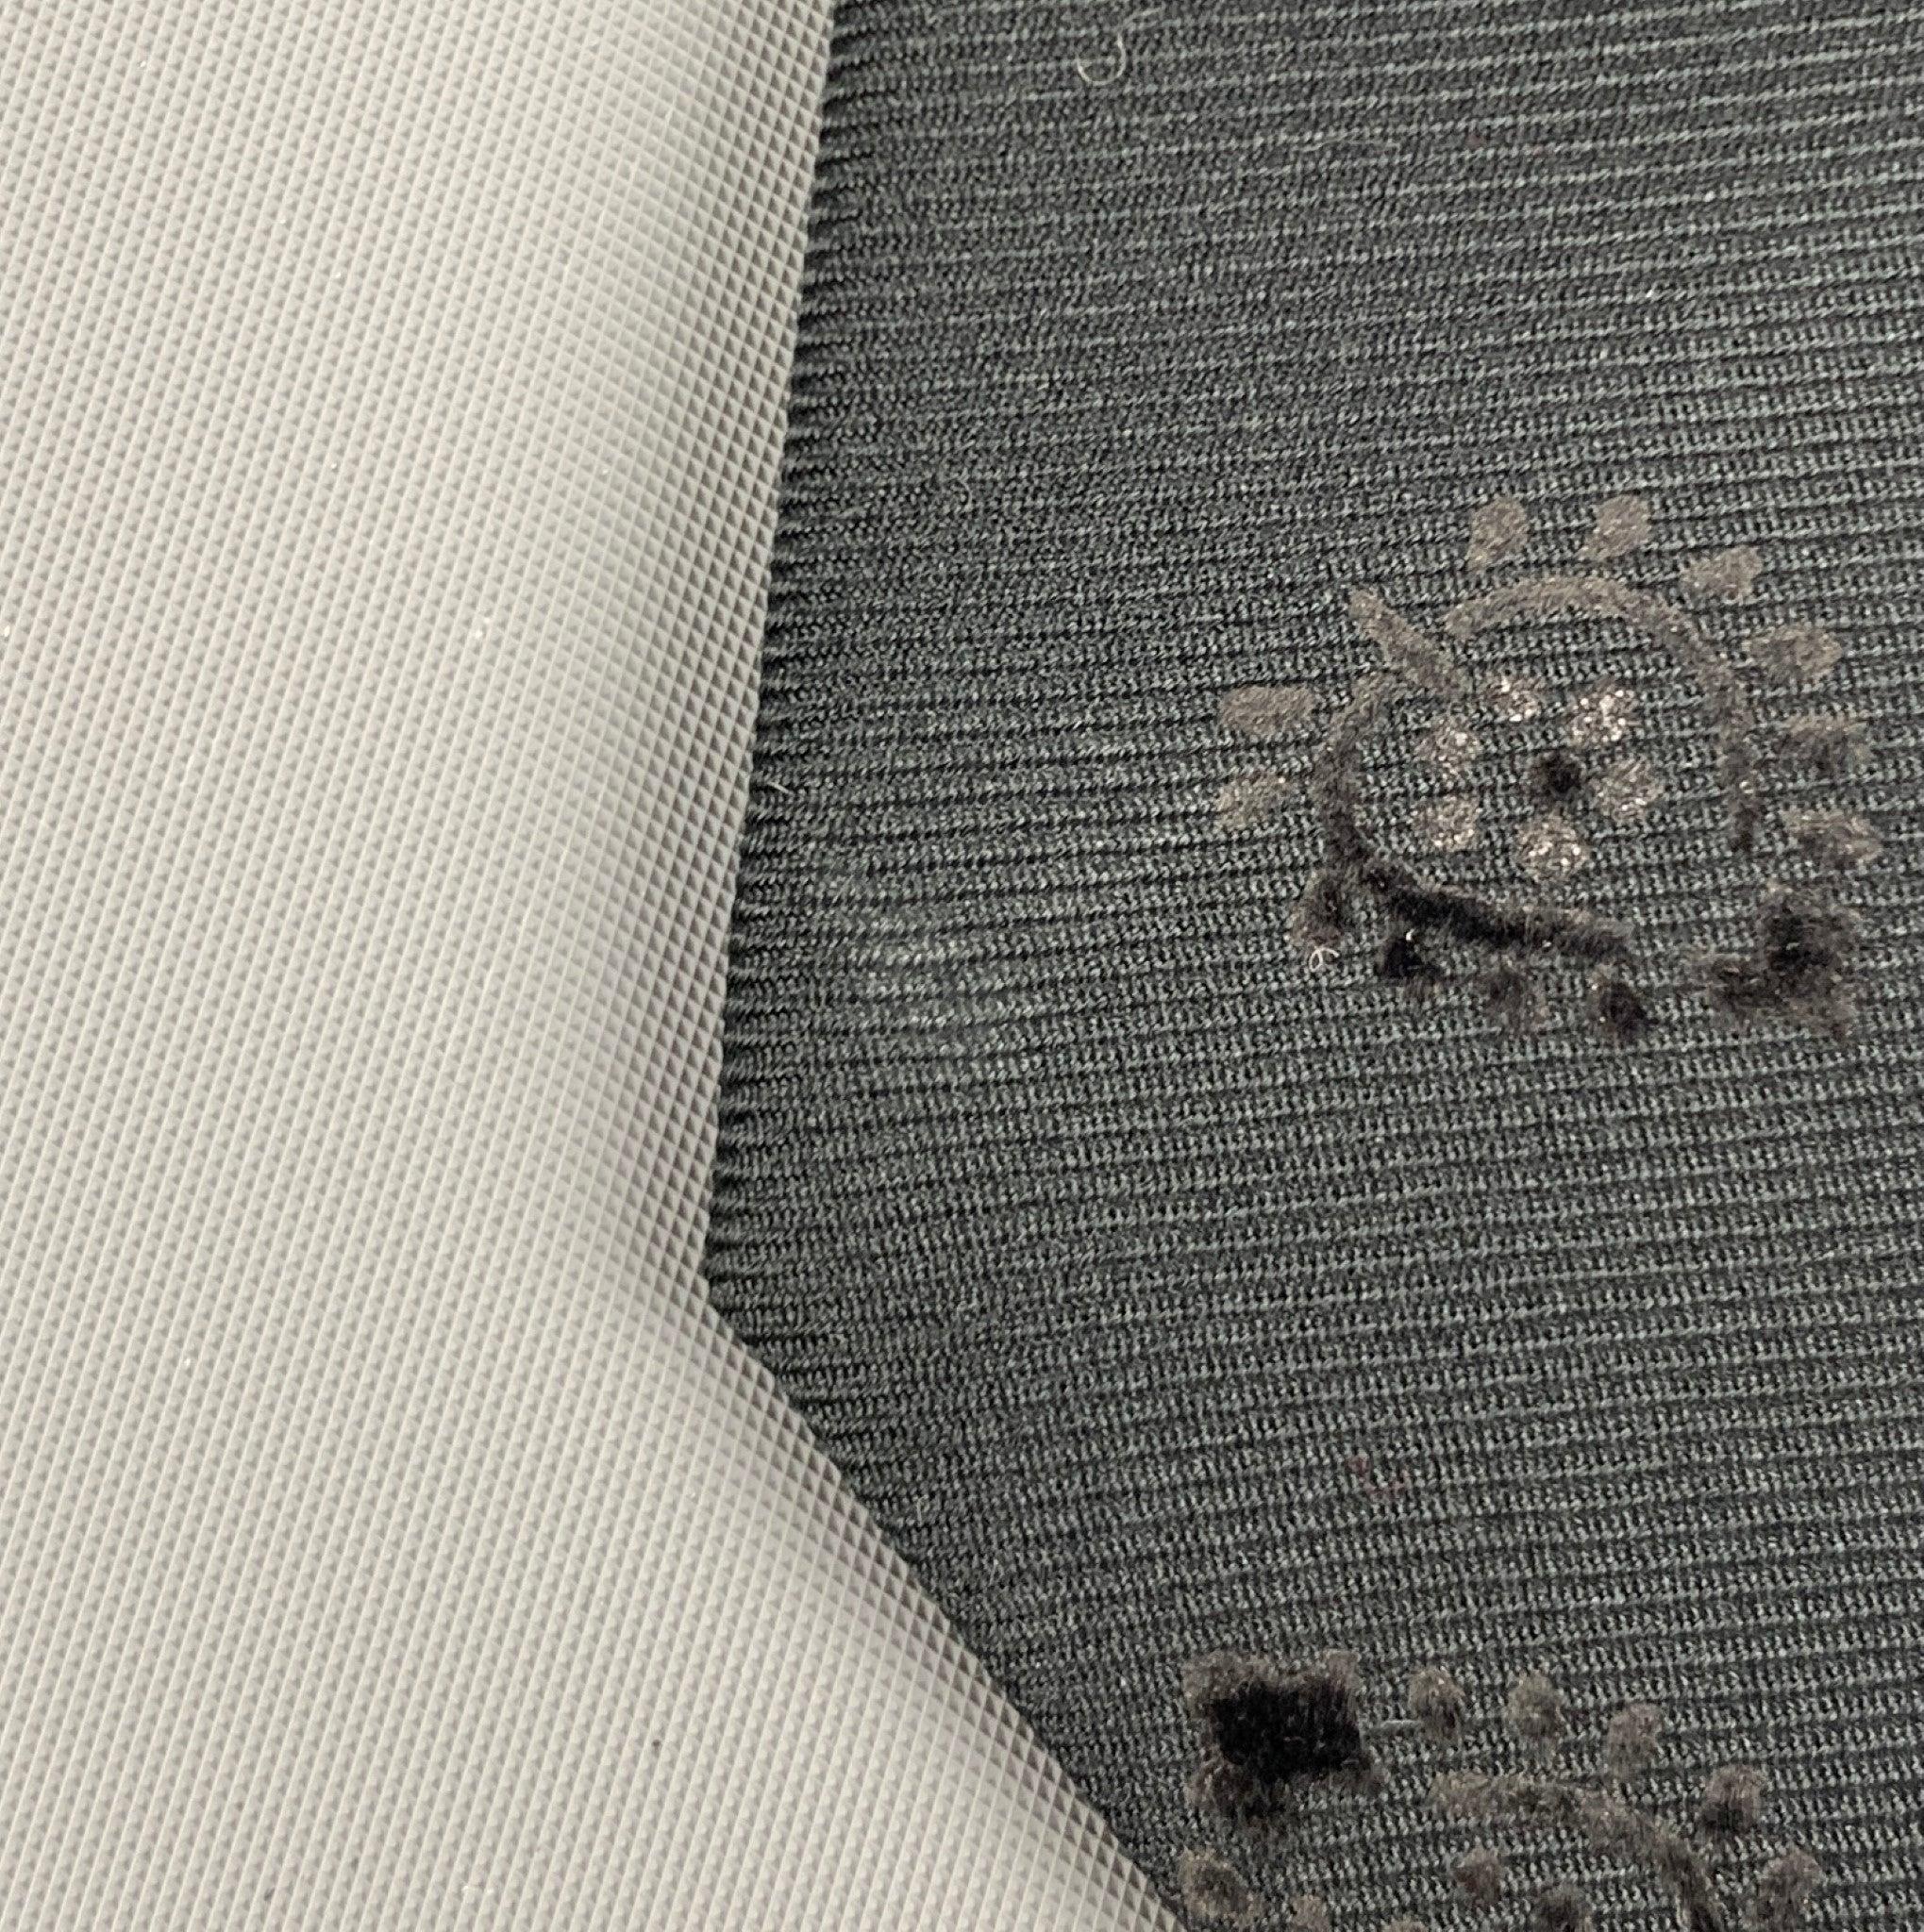 ETRO Black Jacquard Silk Blend Tie For Sale 1